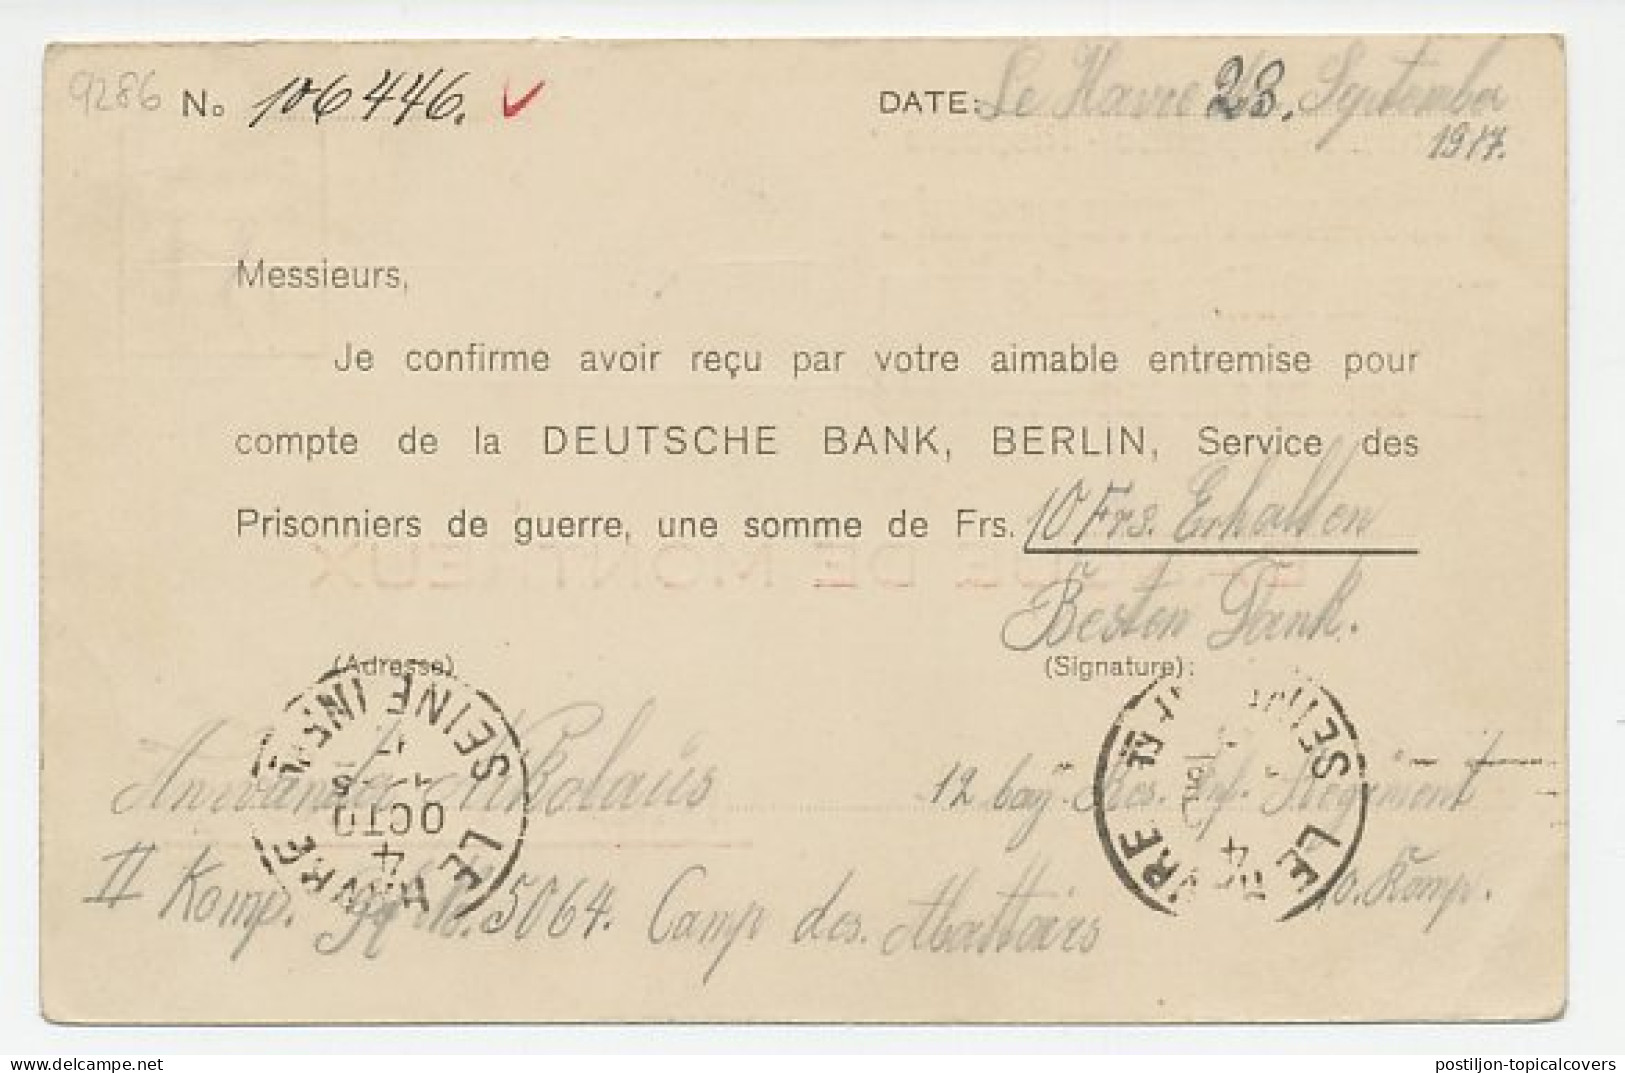 Reply Card POW France - Switzerland 1917 Slaughterhouse Camp - Censored - WWI - WW1